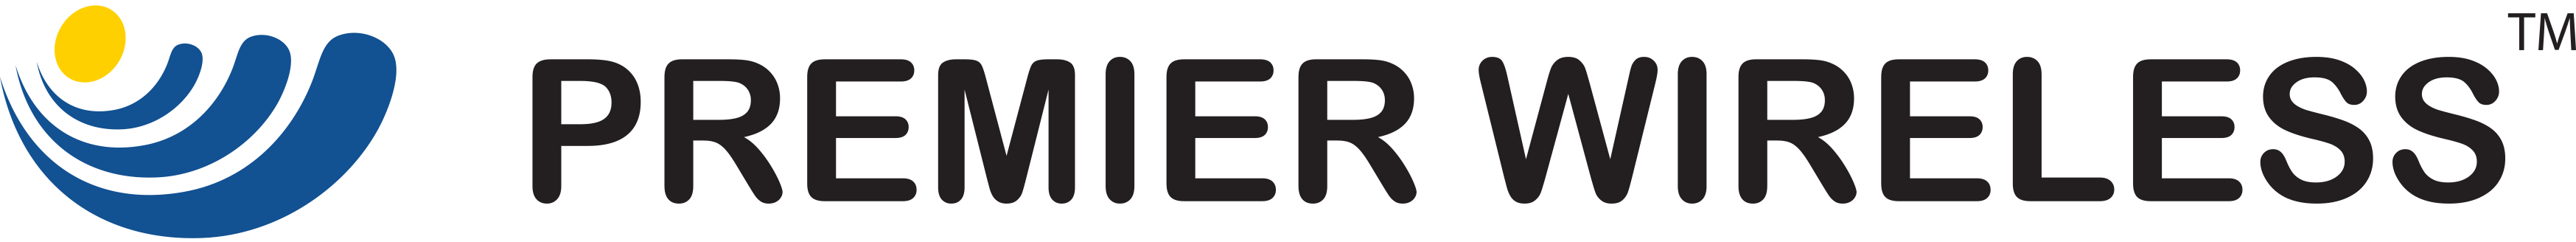 Premier Logo Revised-1